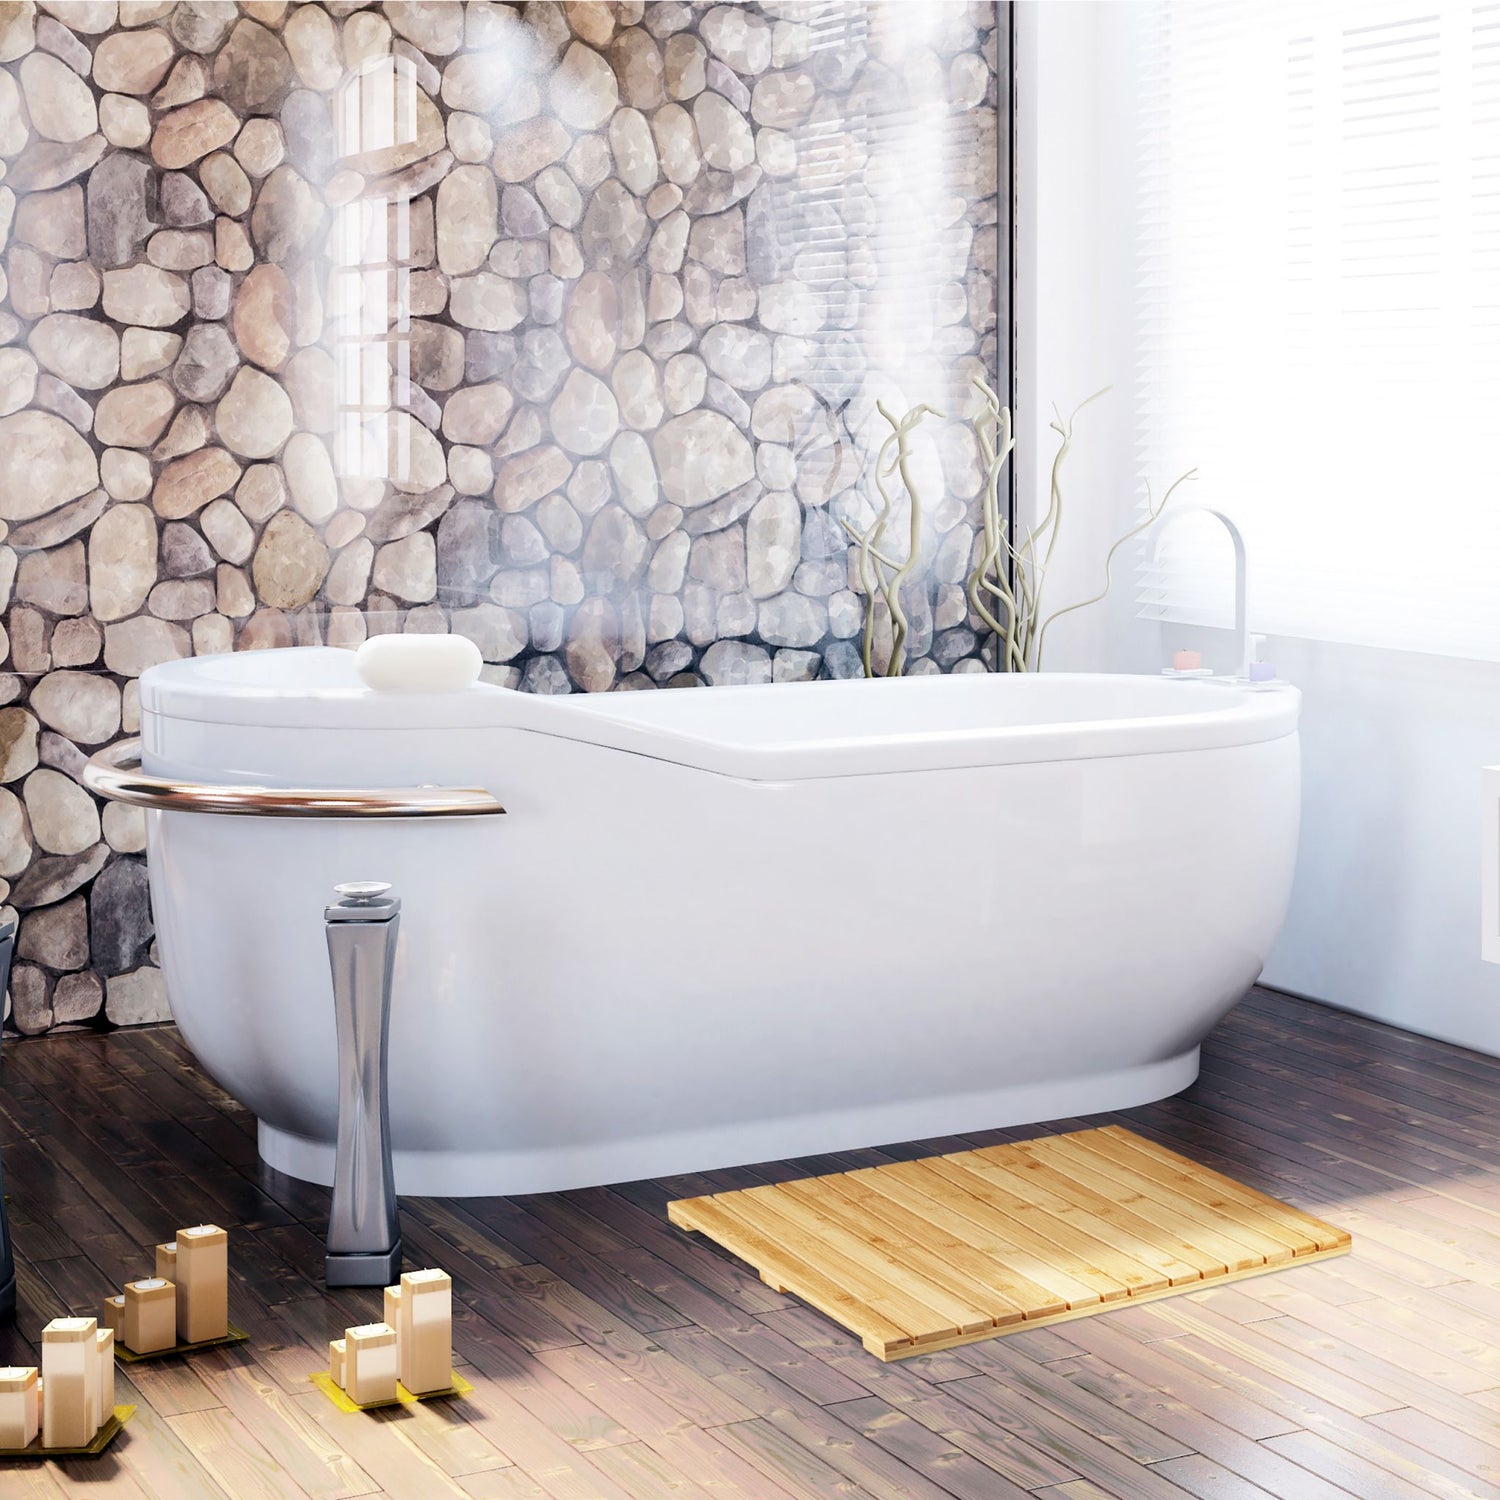 RelaxDays Bamboo Bath Mat by Bamboo Bathrooms